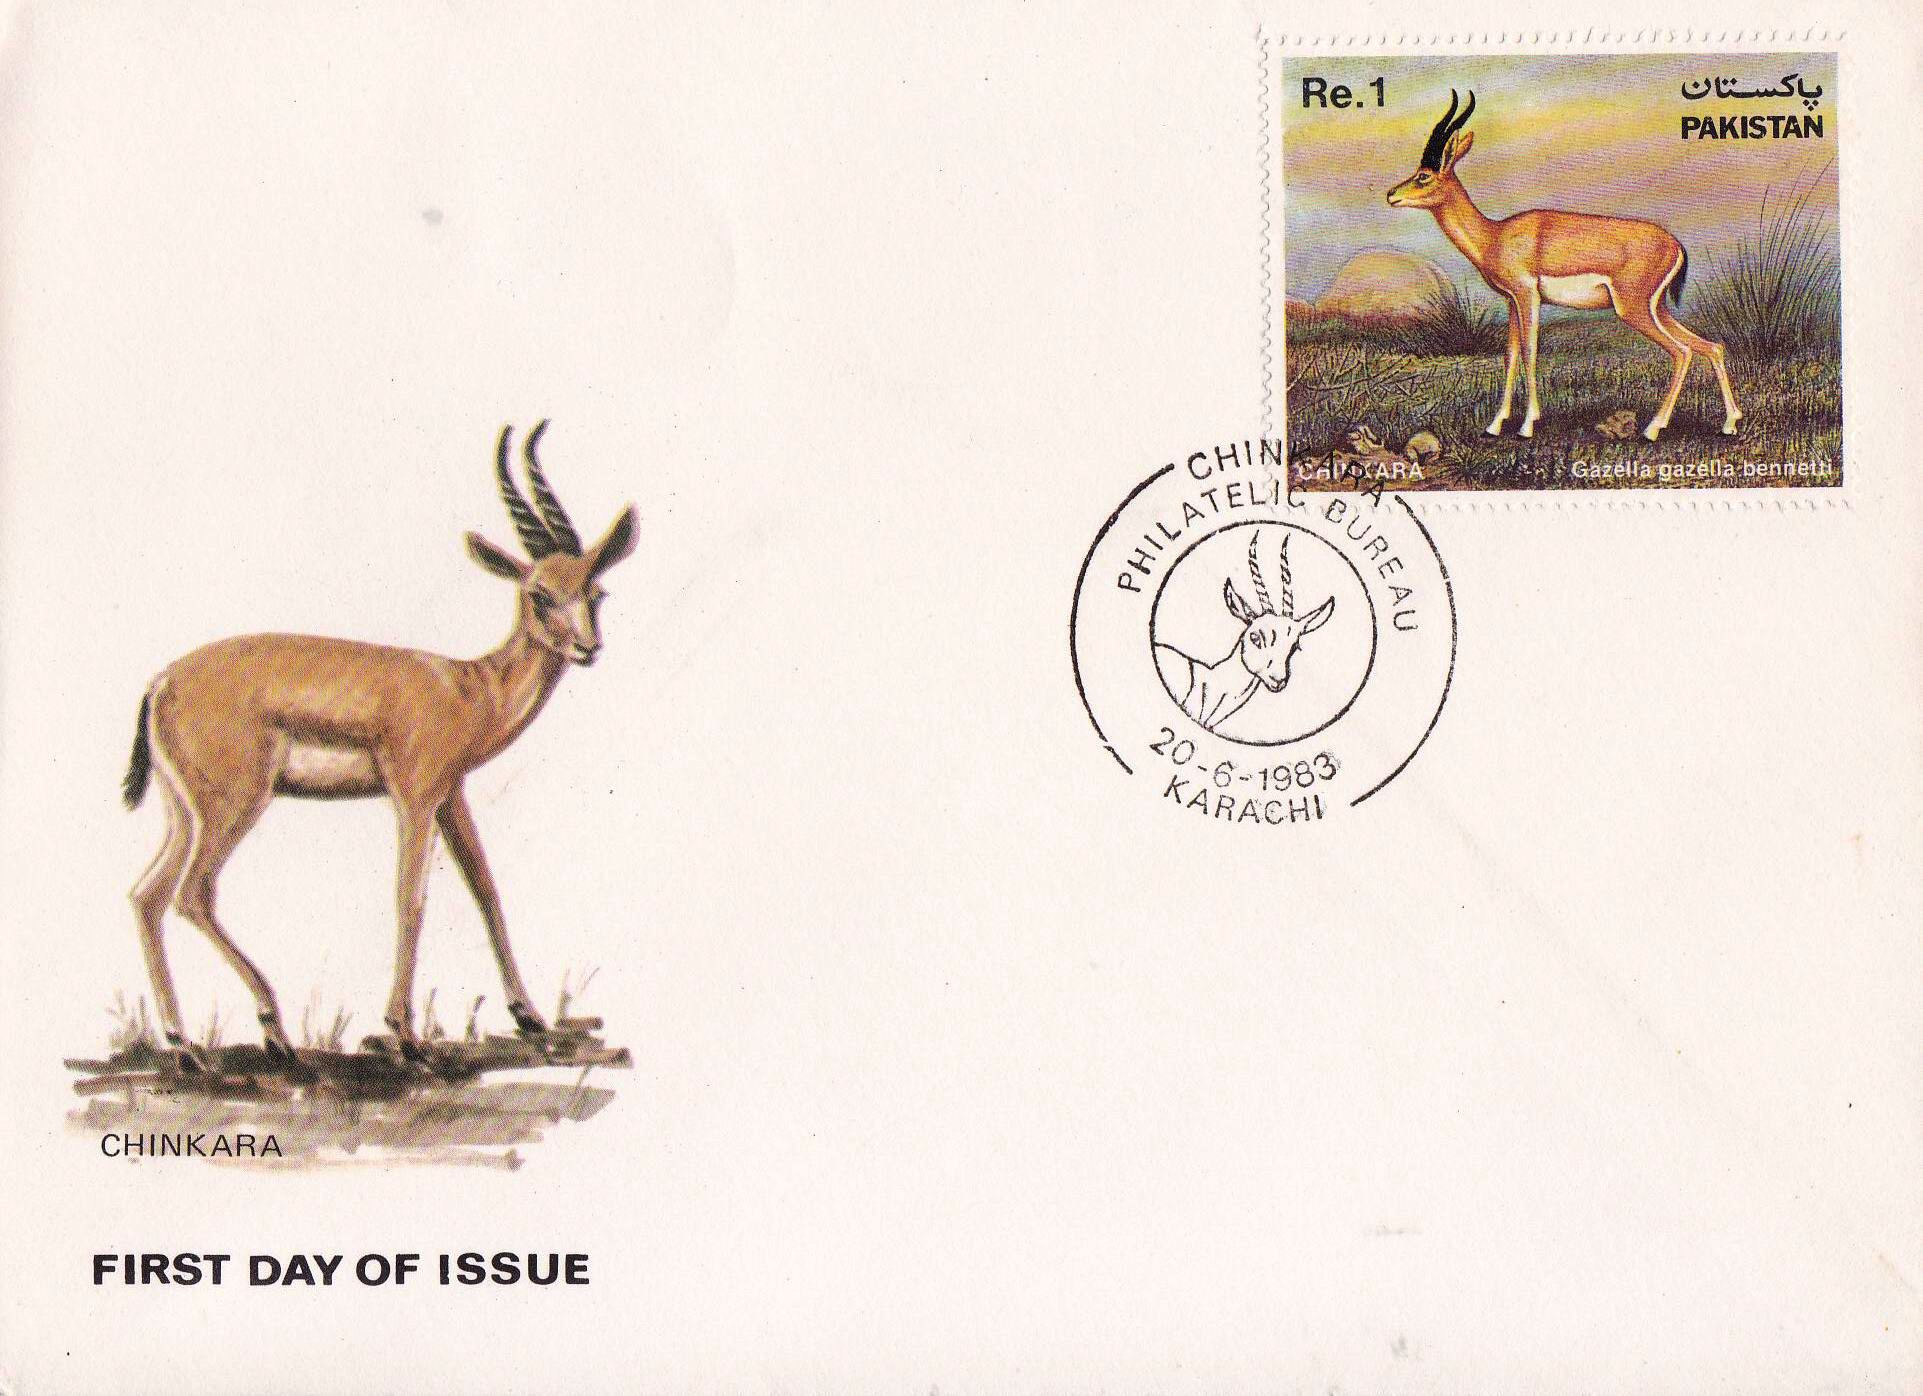 Pakistan Fdc 1983 Brochure & Stamp Chinkara Gazelle - Click Image to Close